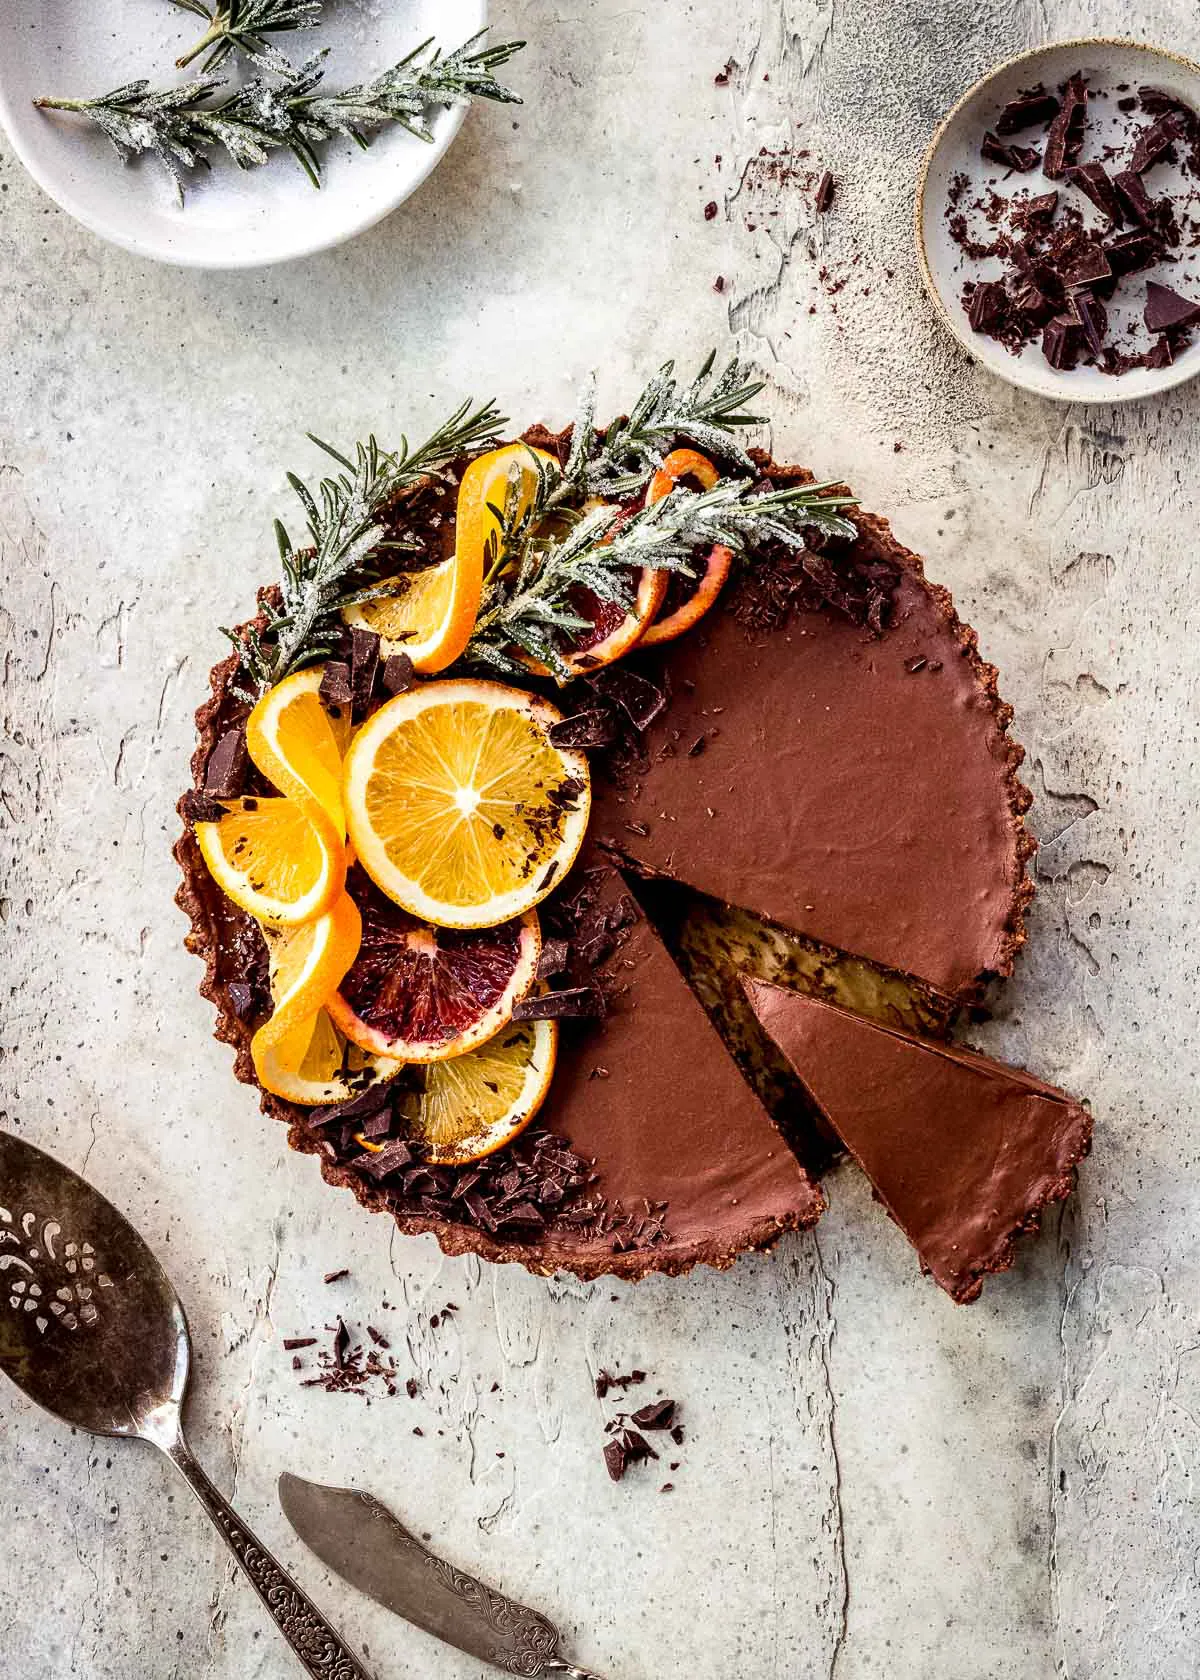 Chocolate orange tart decorated with sprigs of rosemary and orange slices.